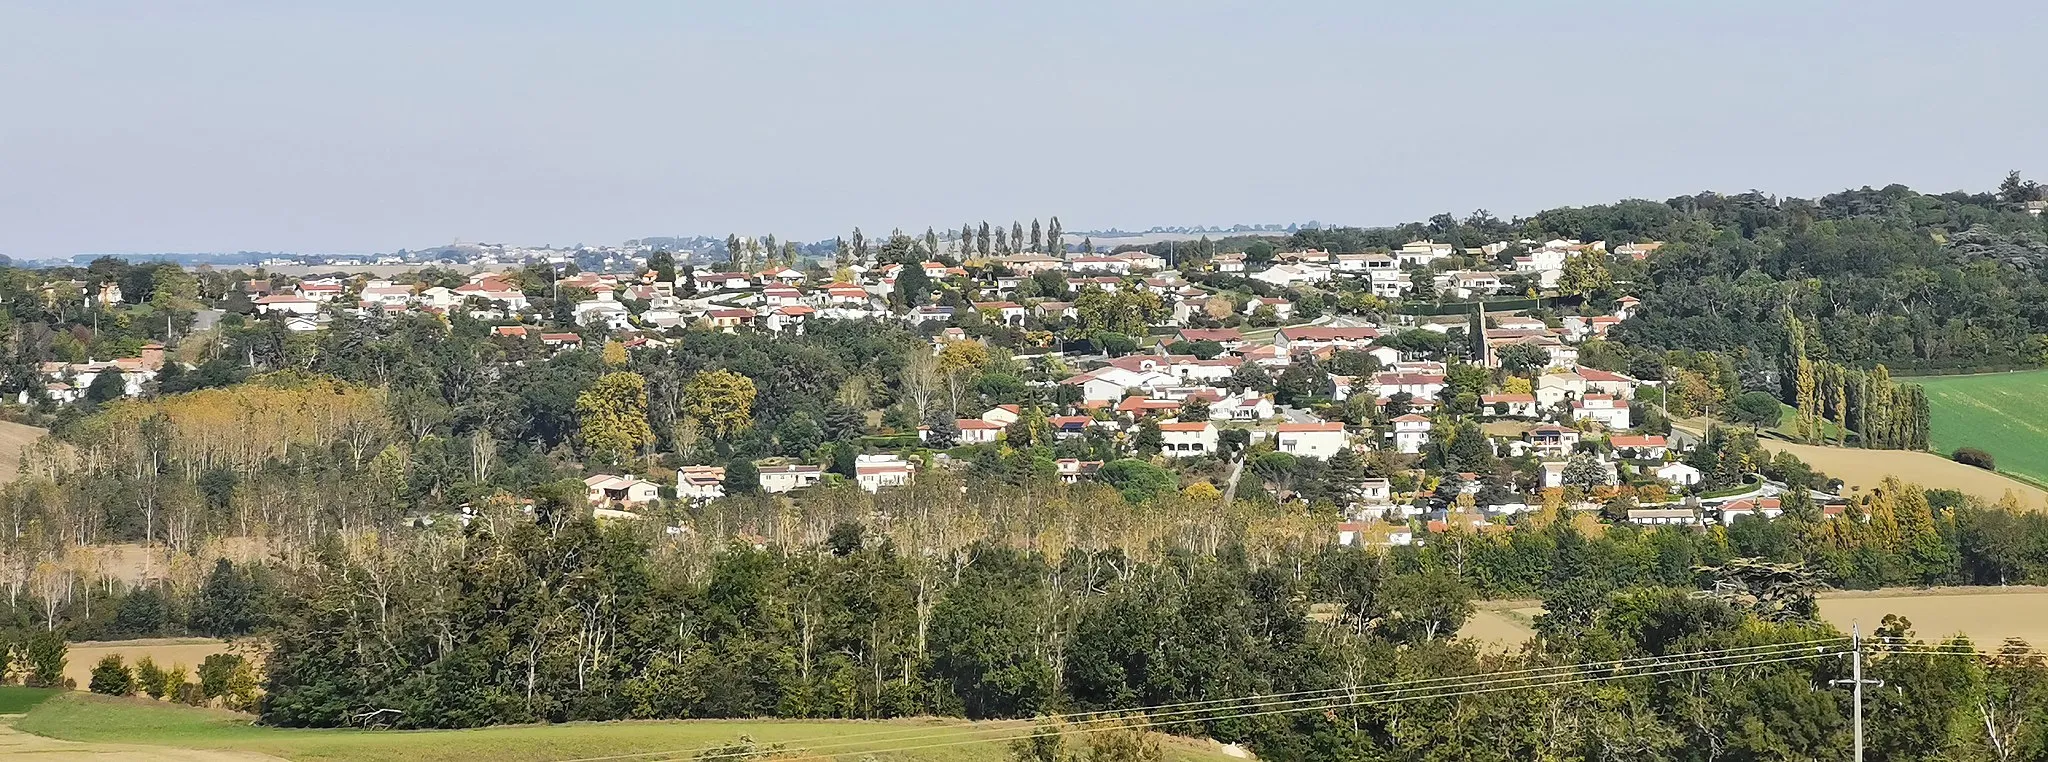 Photo showing: Drémil-Lafage, Haute-Garonne France - seen from the Montauriol district